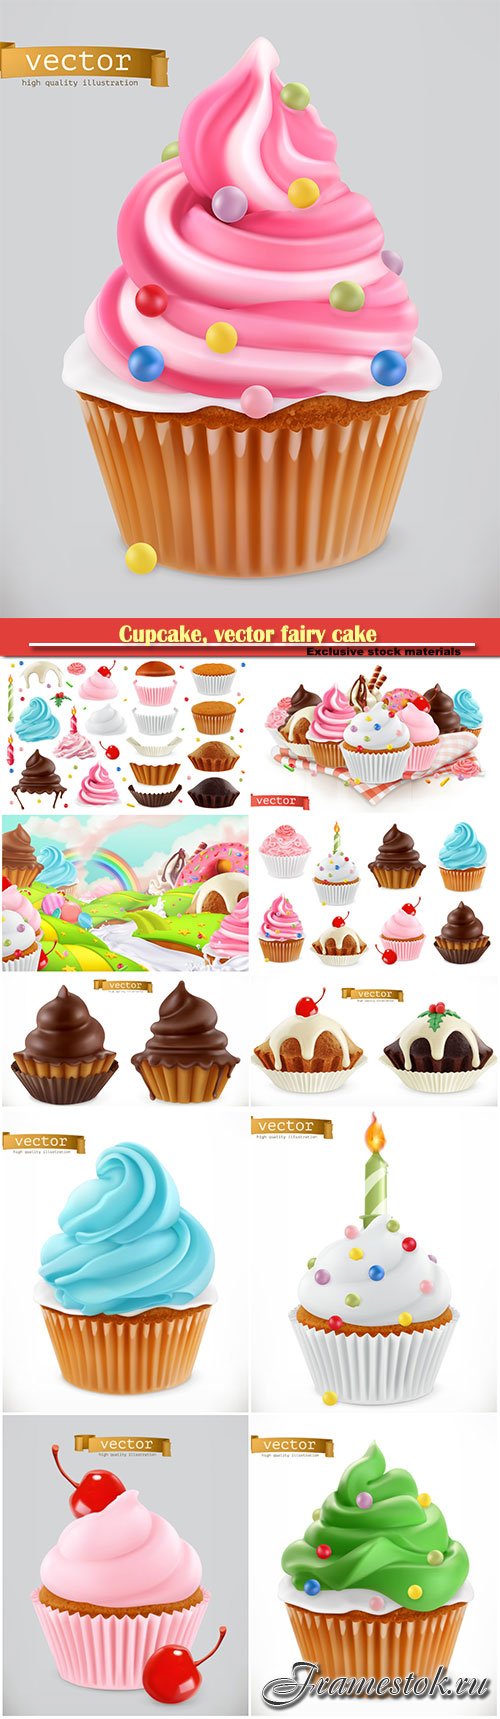 Cupcake, vector fairy cake, 3d realistic vector icon set